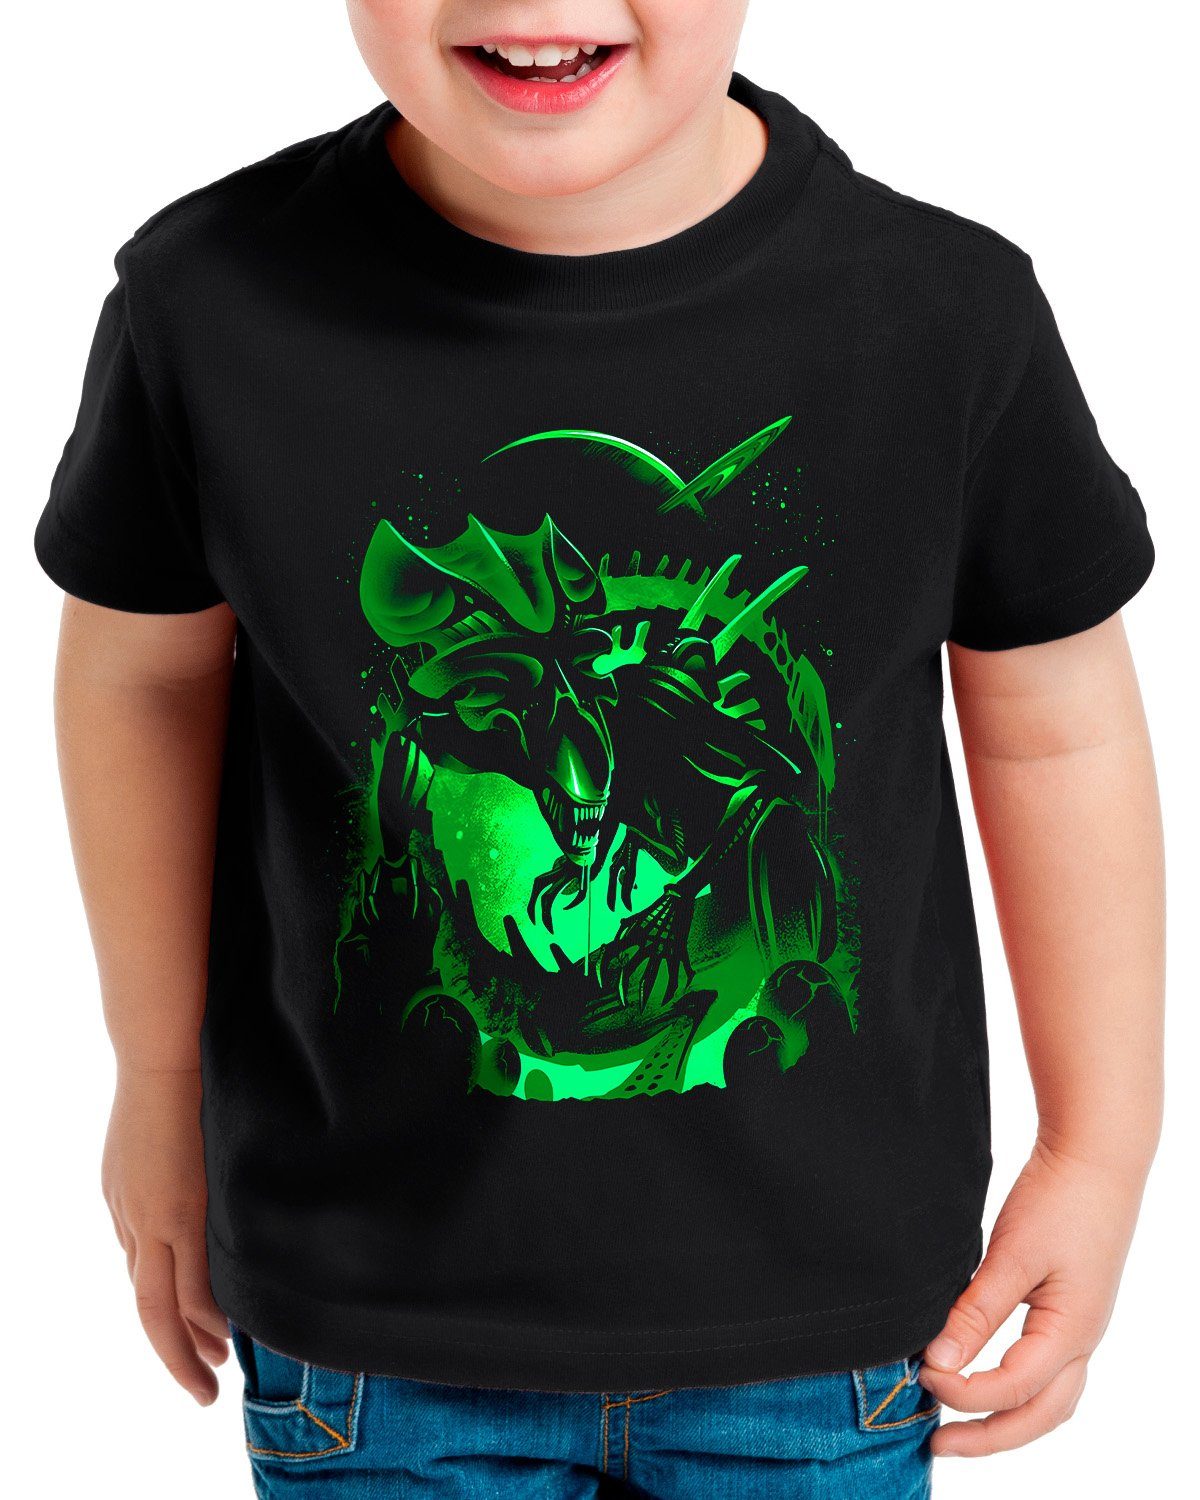 Print-Shirt style3 Queen xenomorph ridley T-Shirt predator Kinder scott Predatory alien